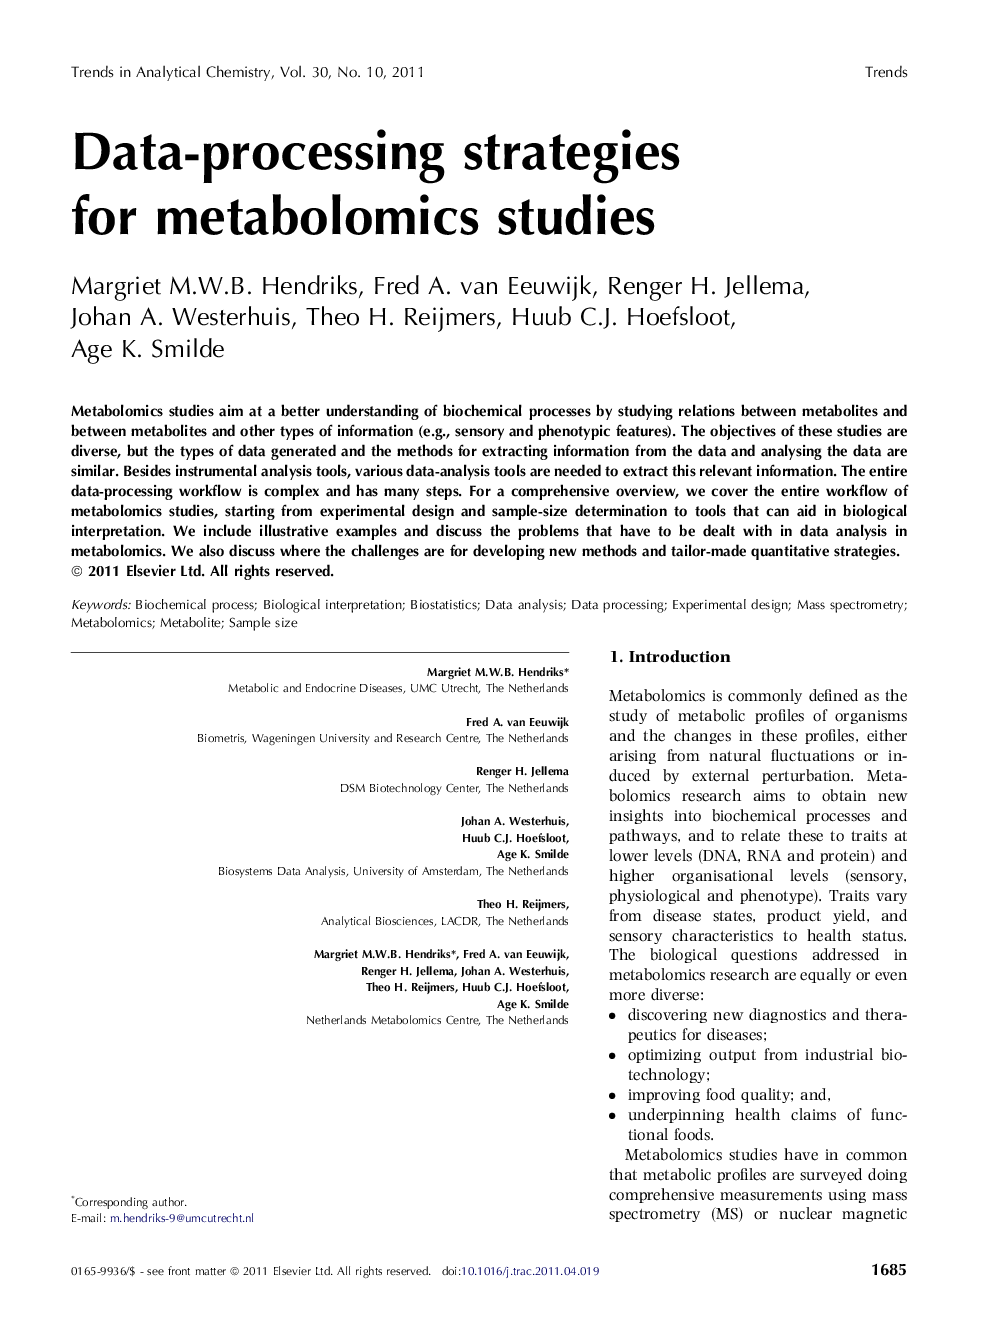 Data-processing strategies for metabolomics studies